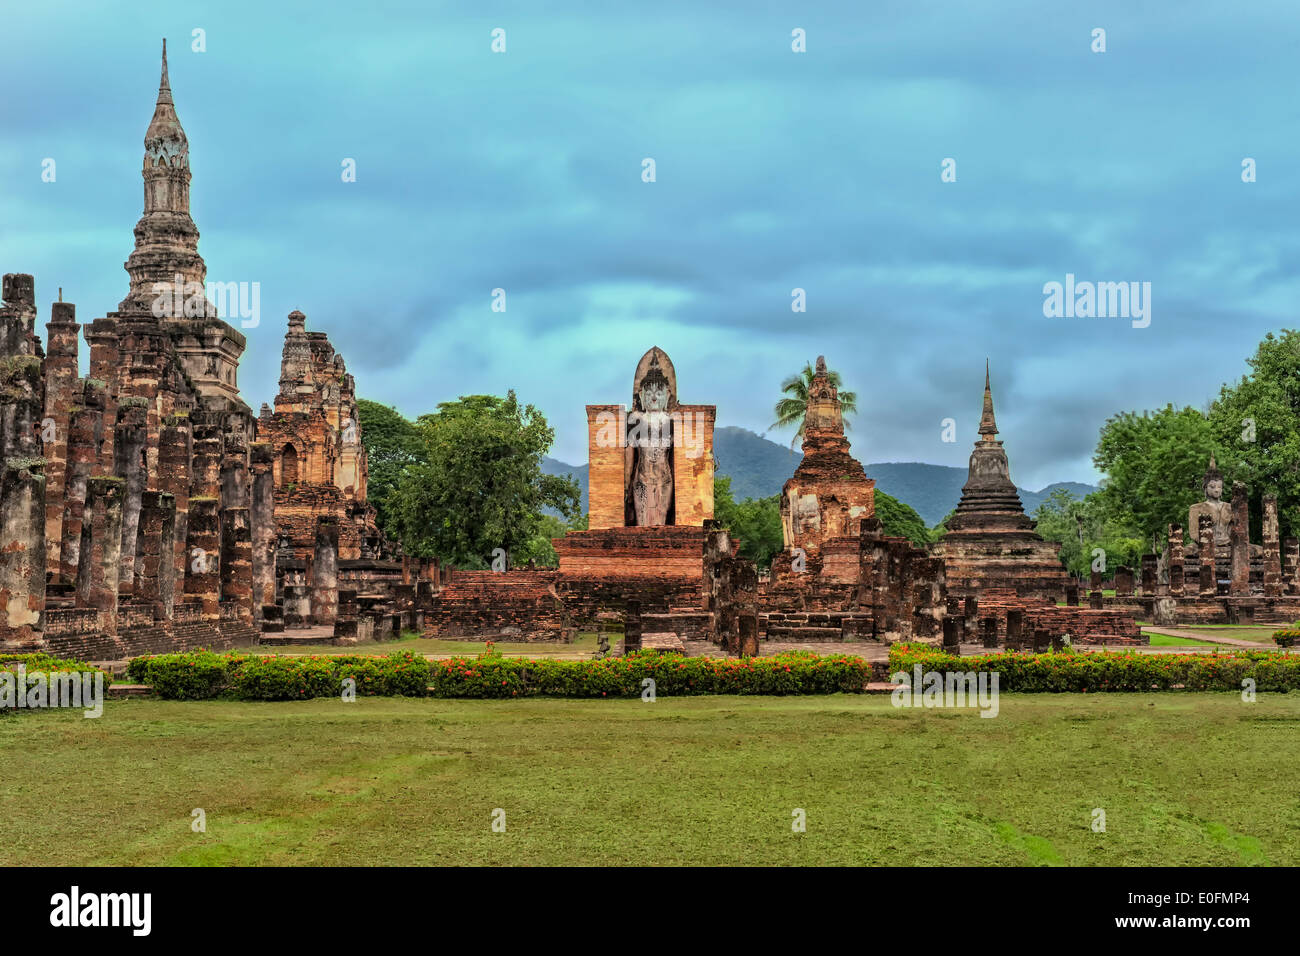 Wat Mahathat temple complex, Sukhothai Historical Park, Thailand Stock Photo